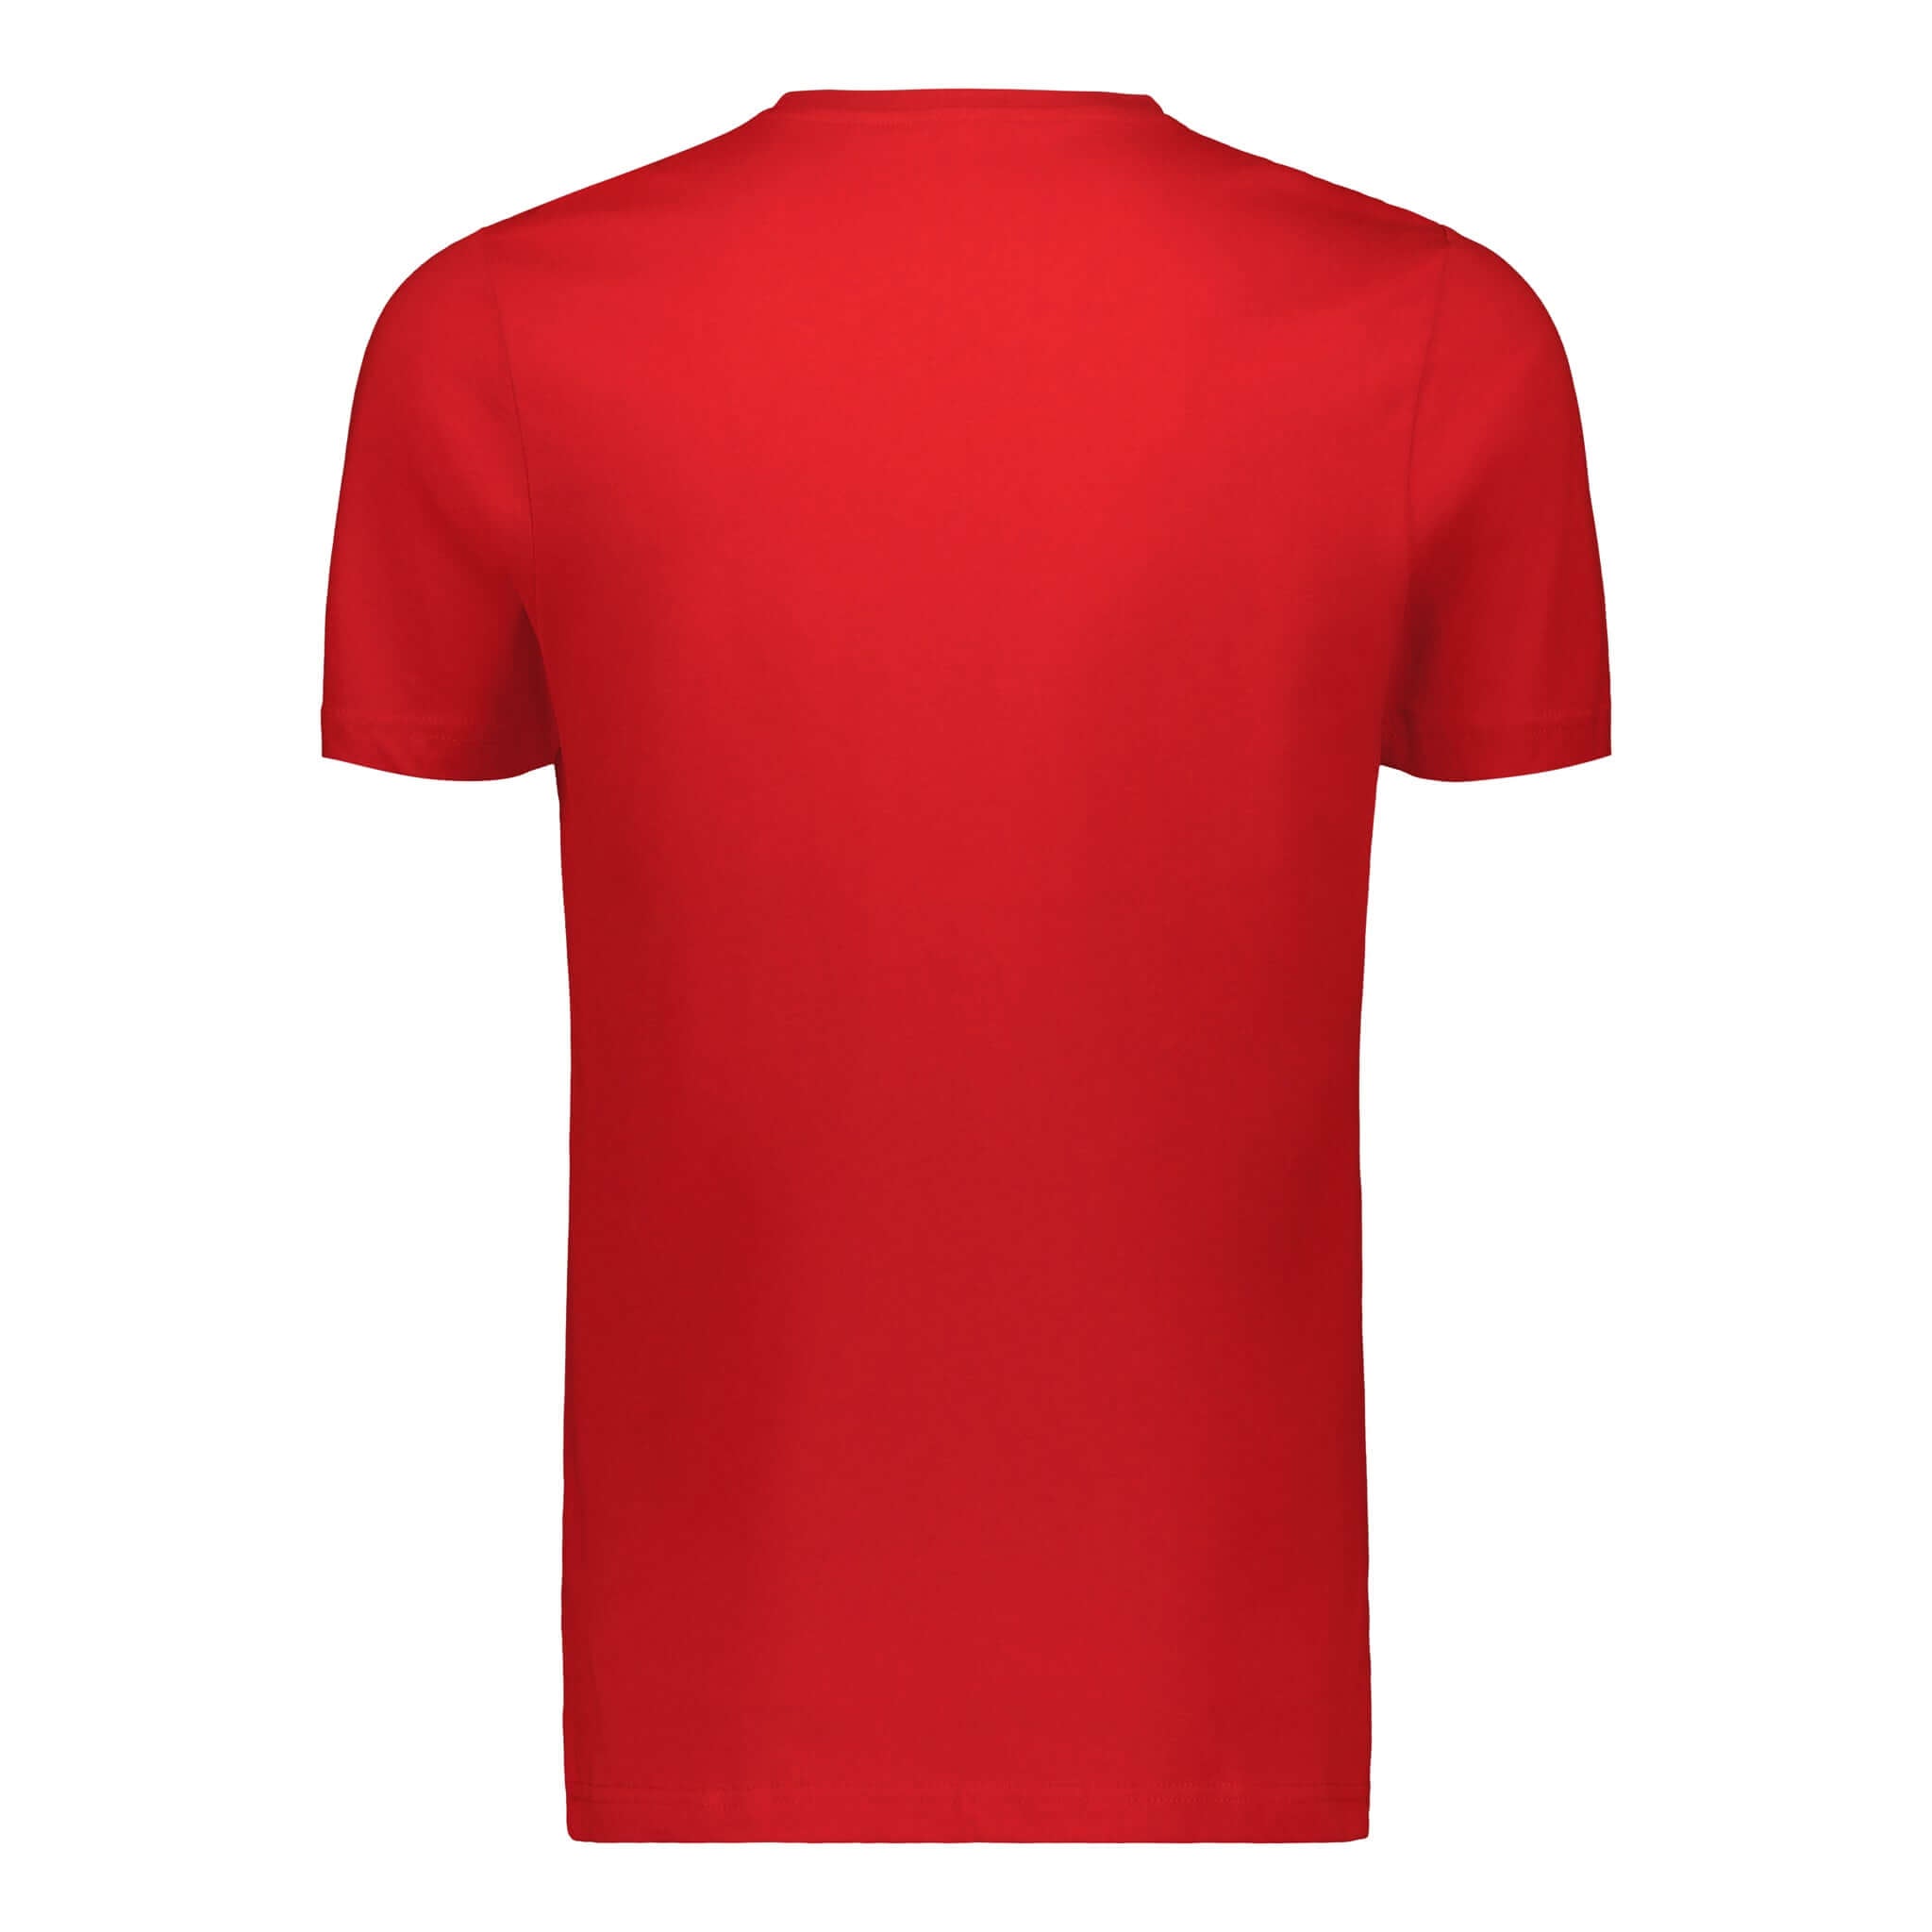 ENCE Basic T-Shirt Danish Red | ENCE Shop